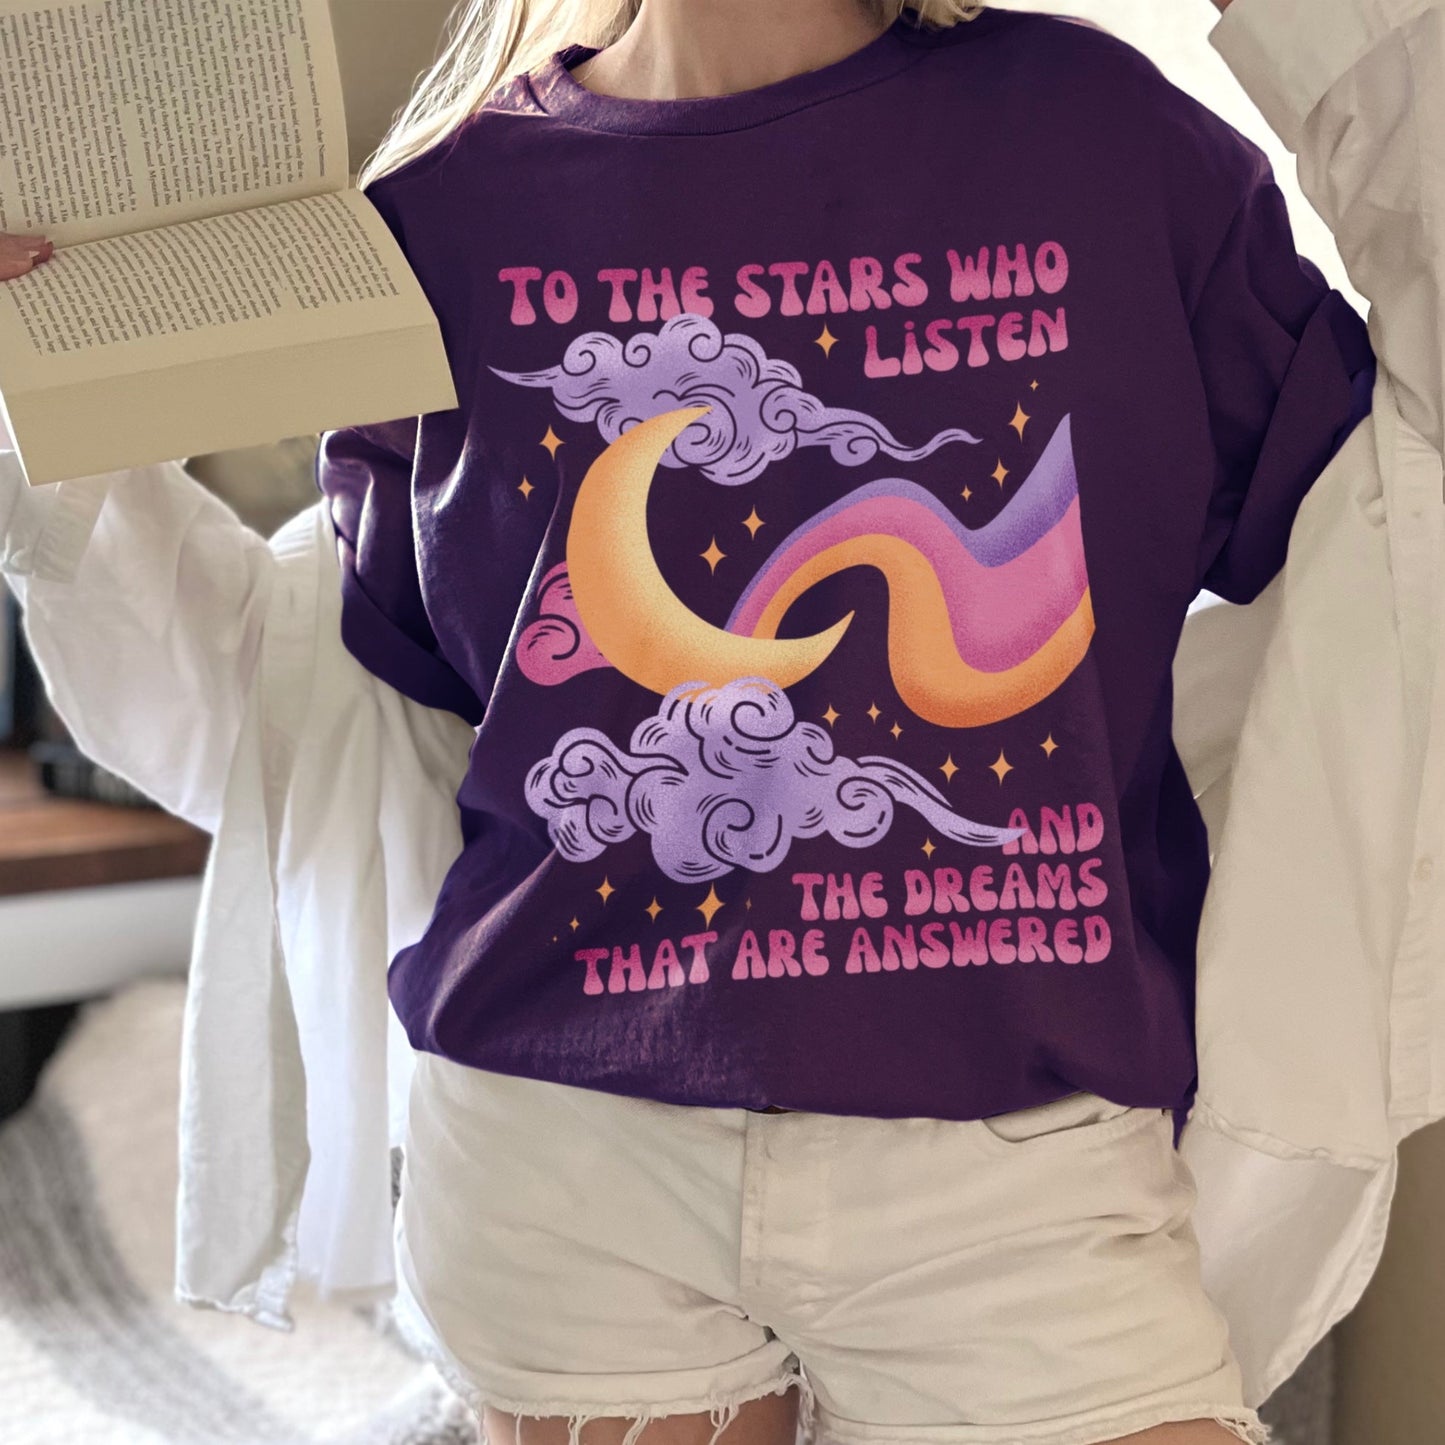 ACOTAR Tee - To The Stars Who Listen - Bookish Shirt